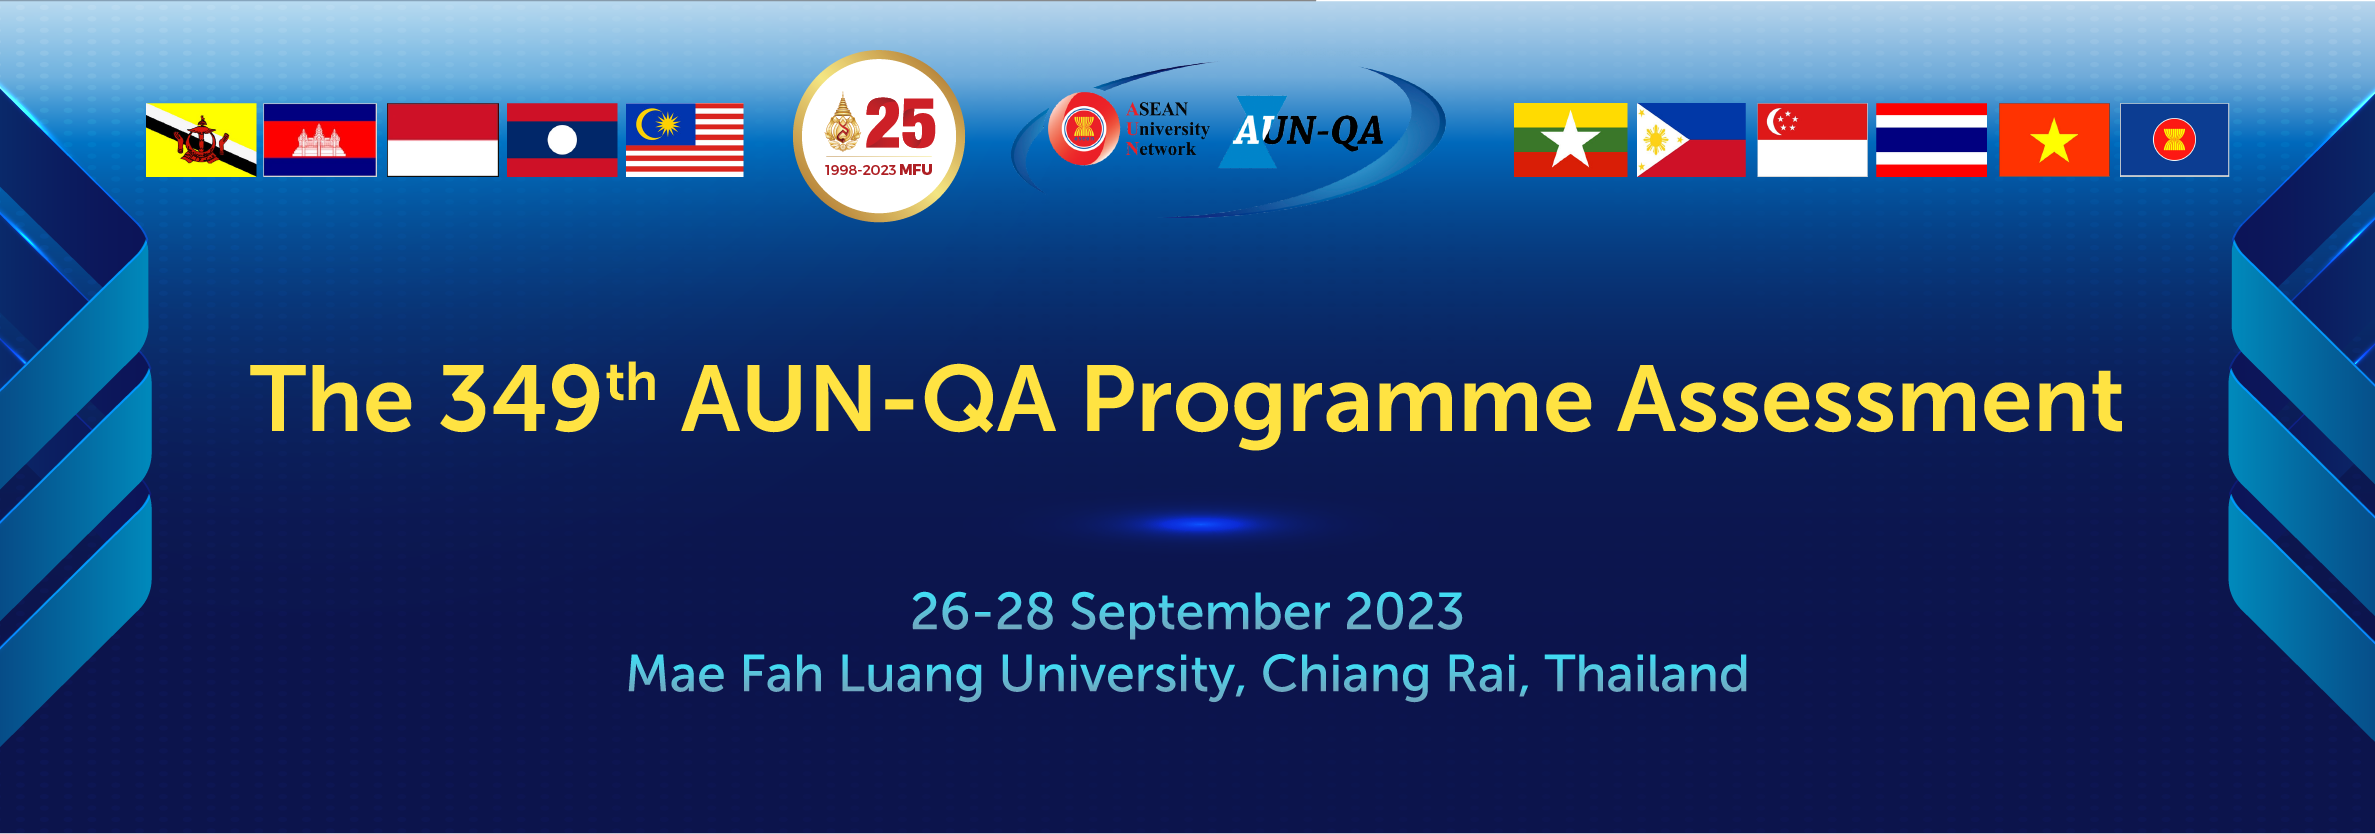 The 349th AUN-QA Programme ASSESSMENT